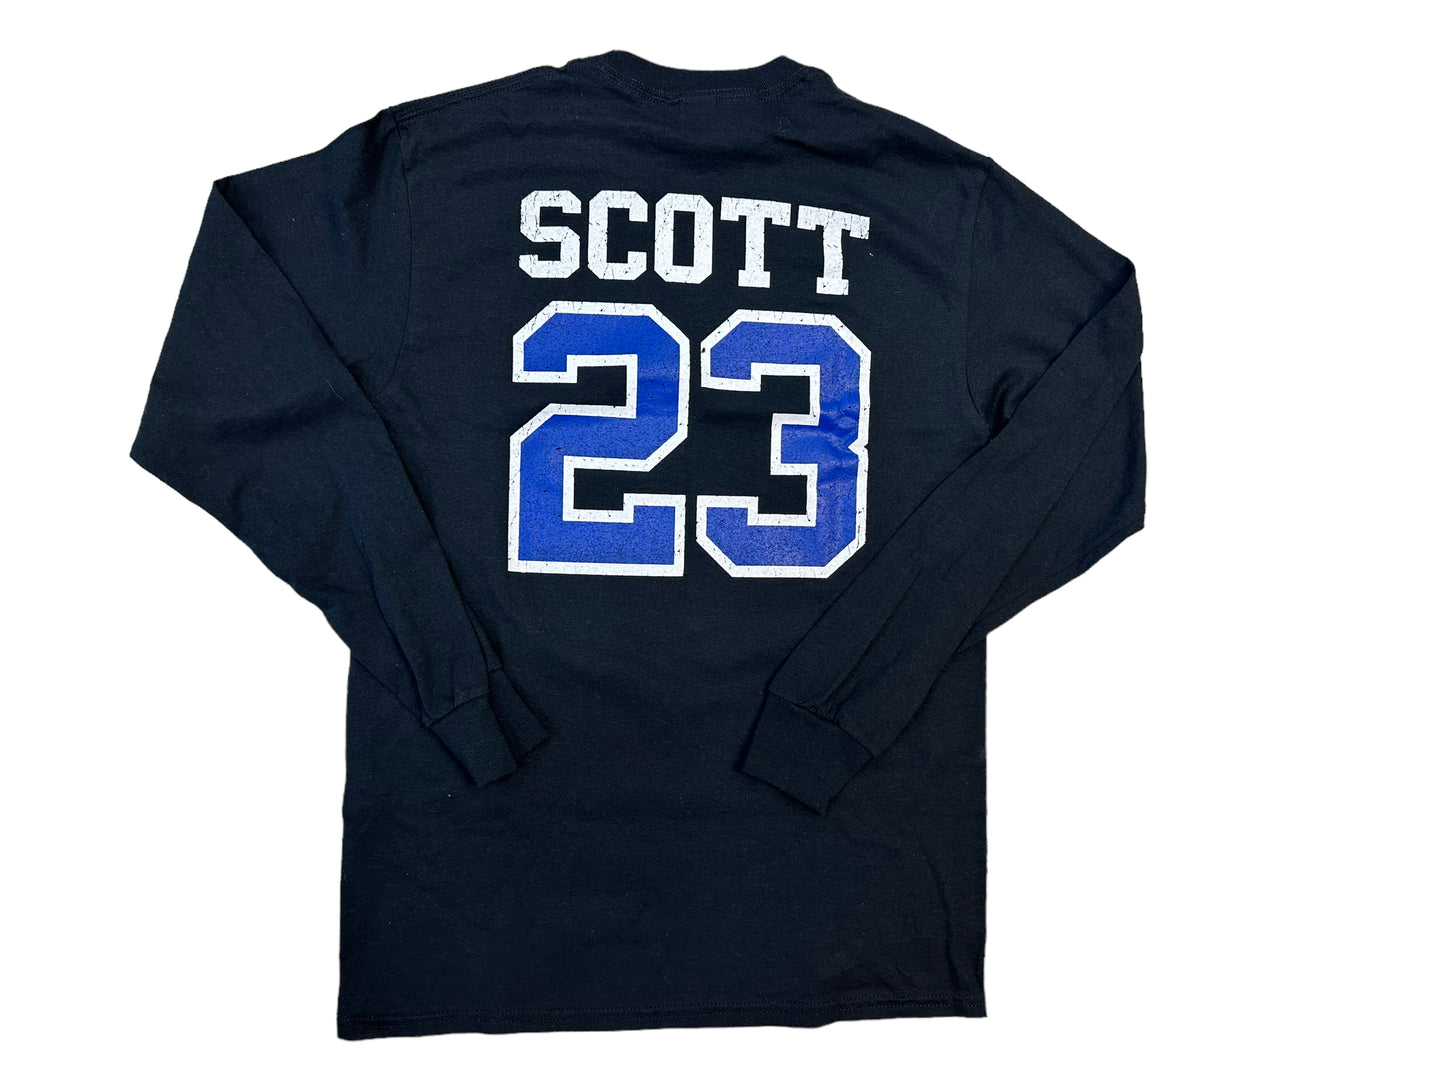 Scott 23 One Tree Hill – Long Sleeve Shirt – Black